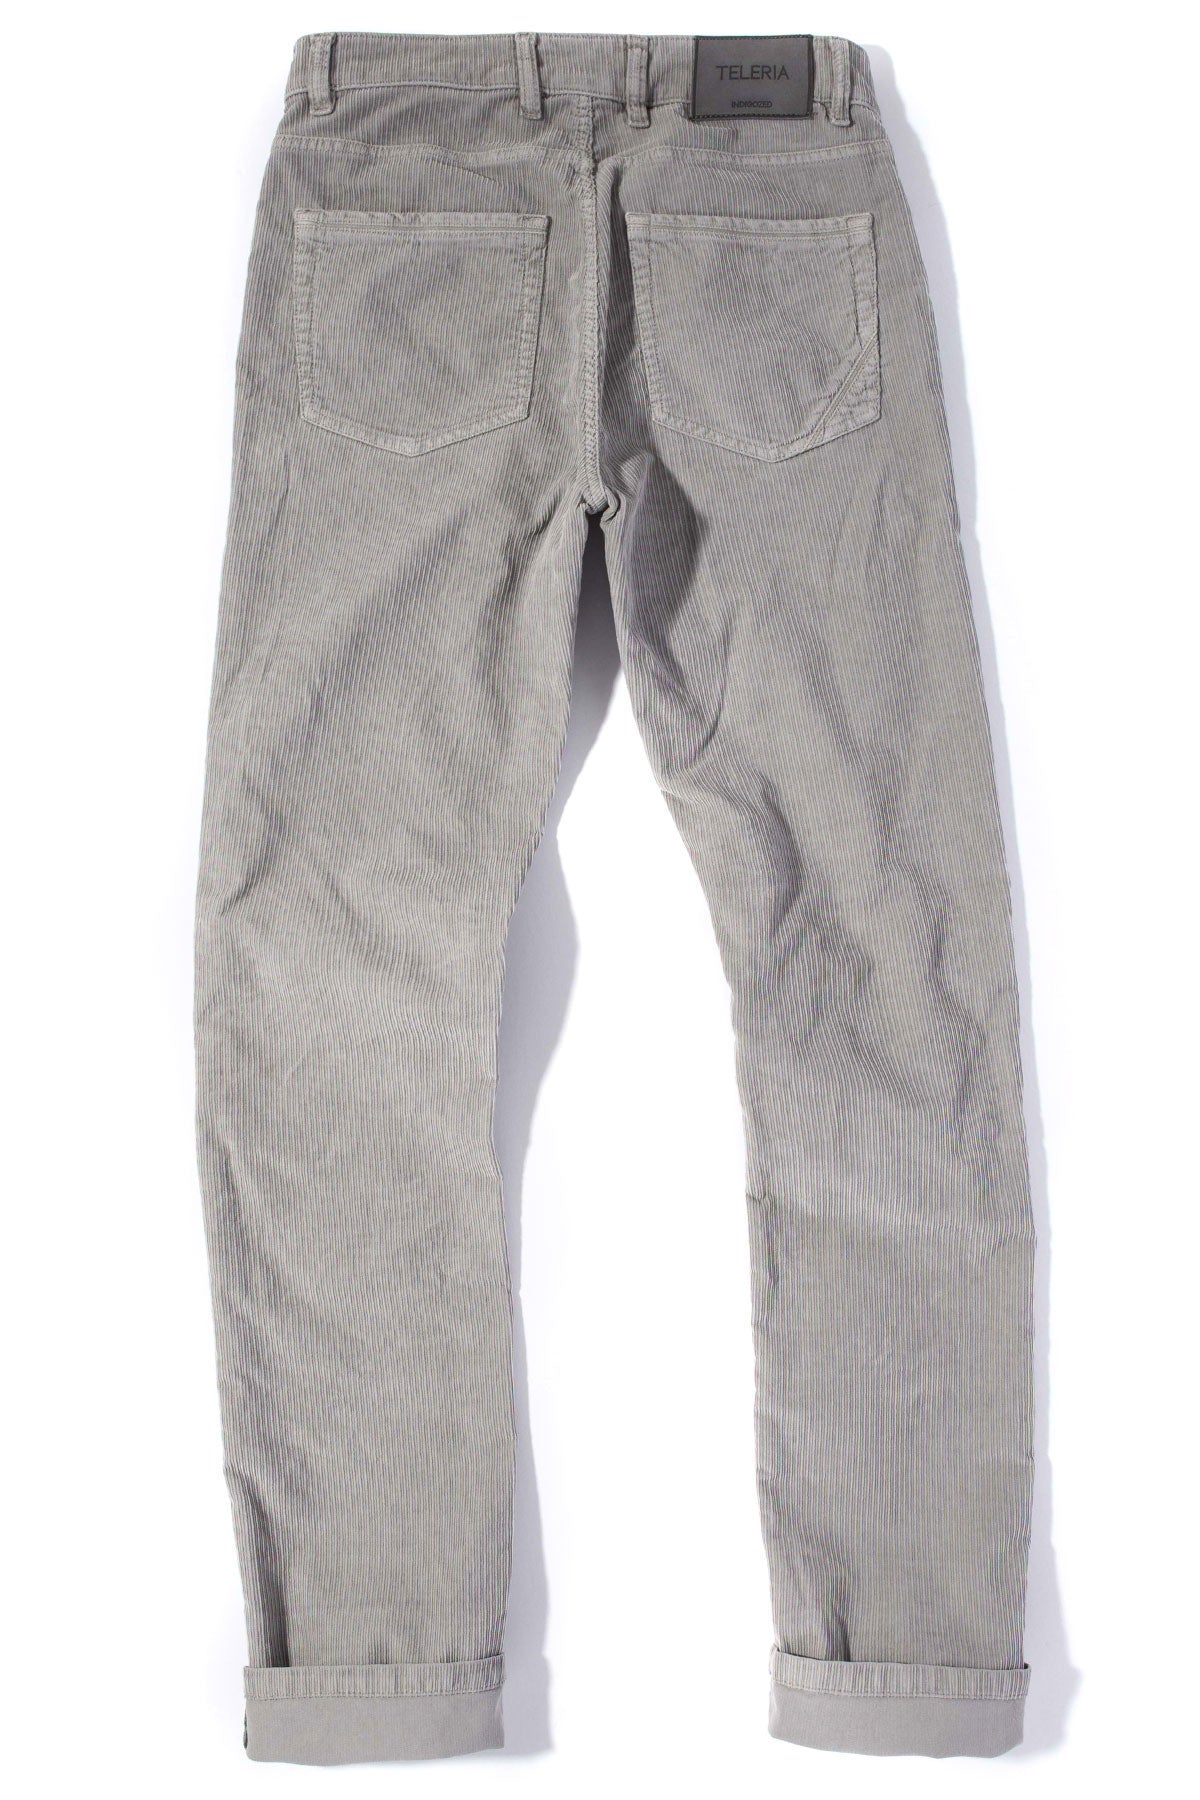 Payson Cord Pants in Cenere | Mens - Pants - 5 Pocket | Teleria Zed